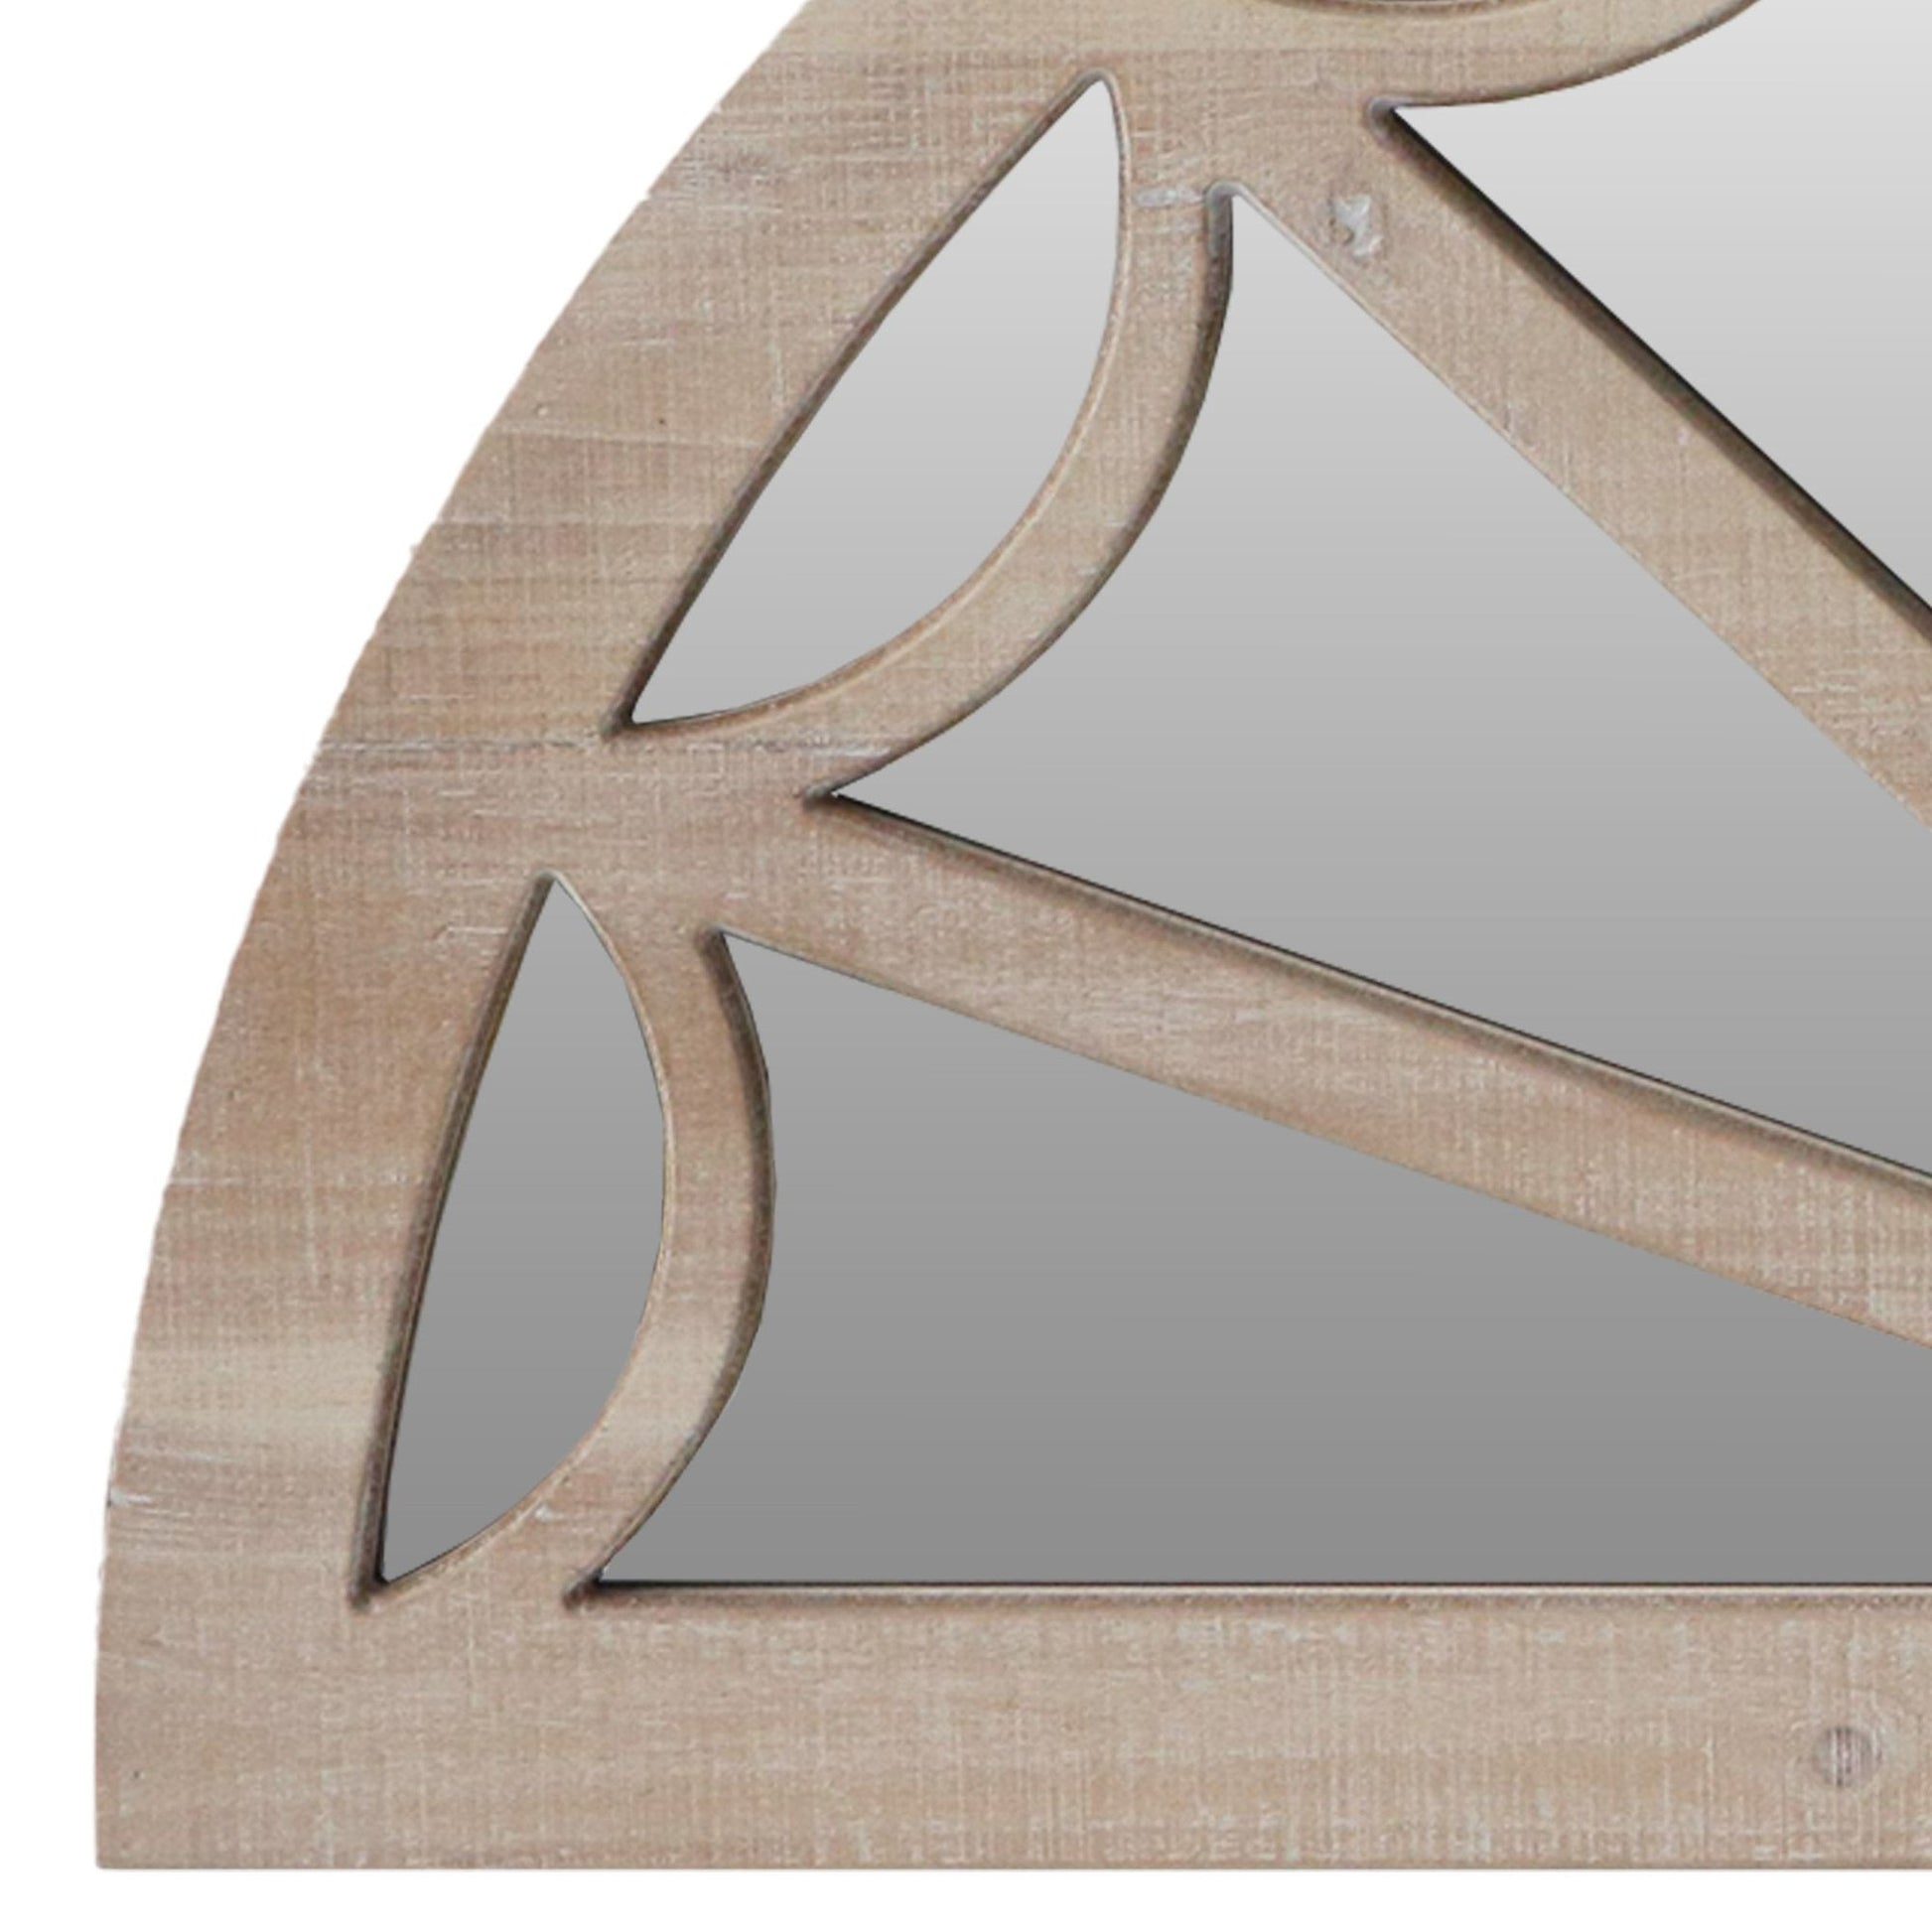 Benzara 40" Brown Window Pane Design Half Crescent Moon Shaped Wooden Wall Mirror